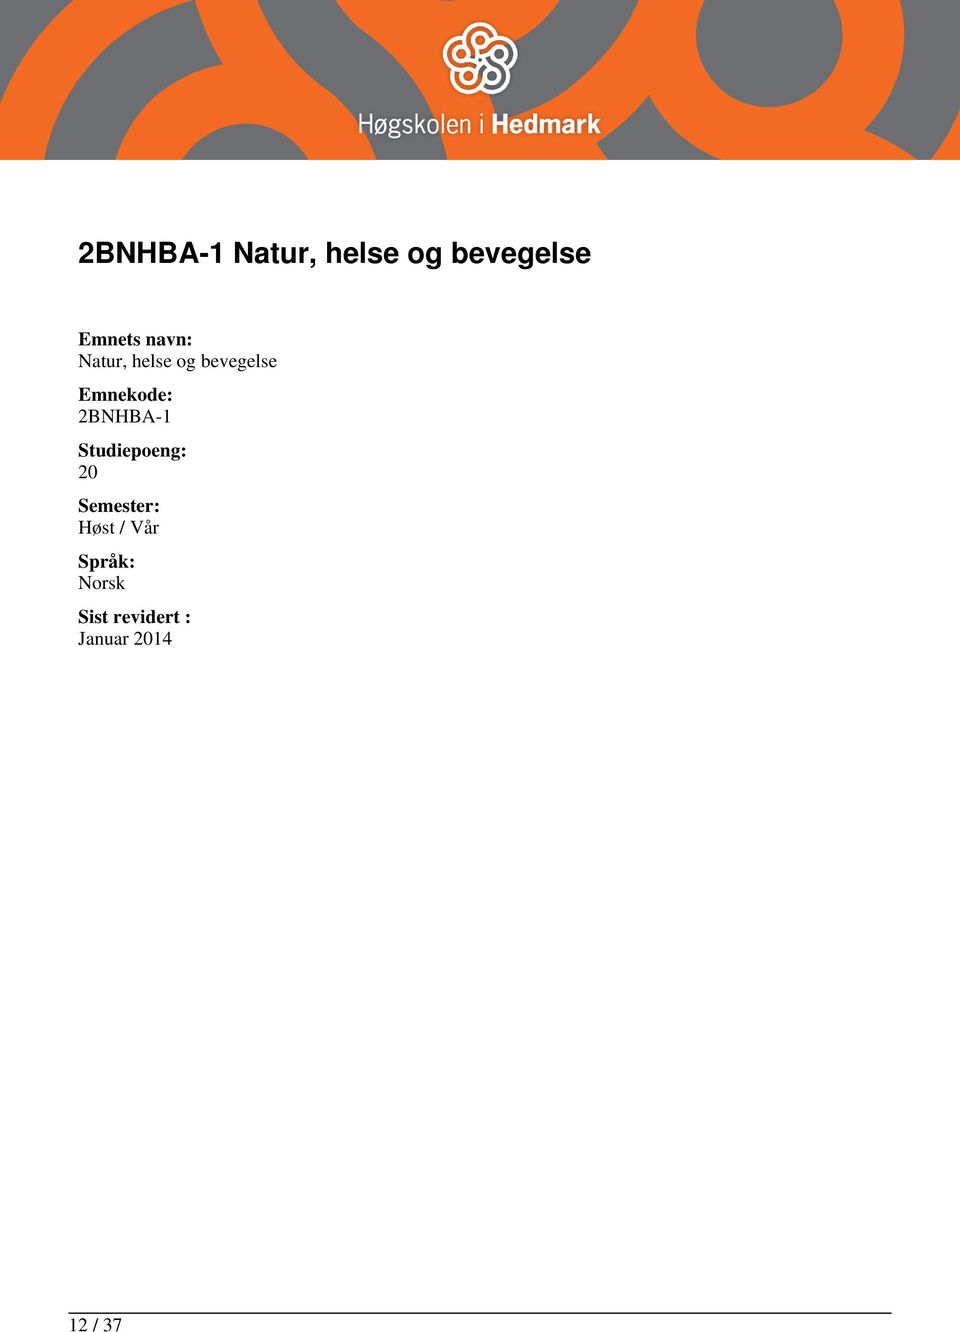 2BNHBA-1 Studiepoeng: 20 Semester: Høst /